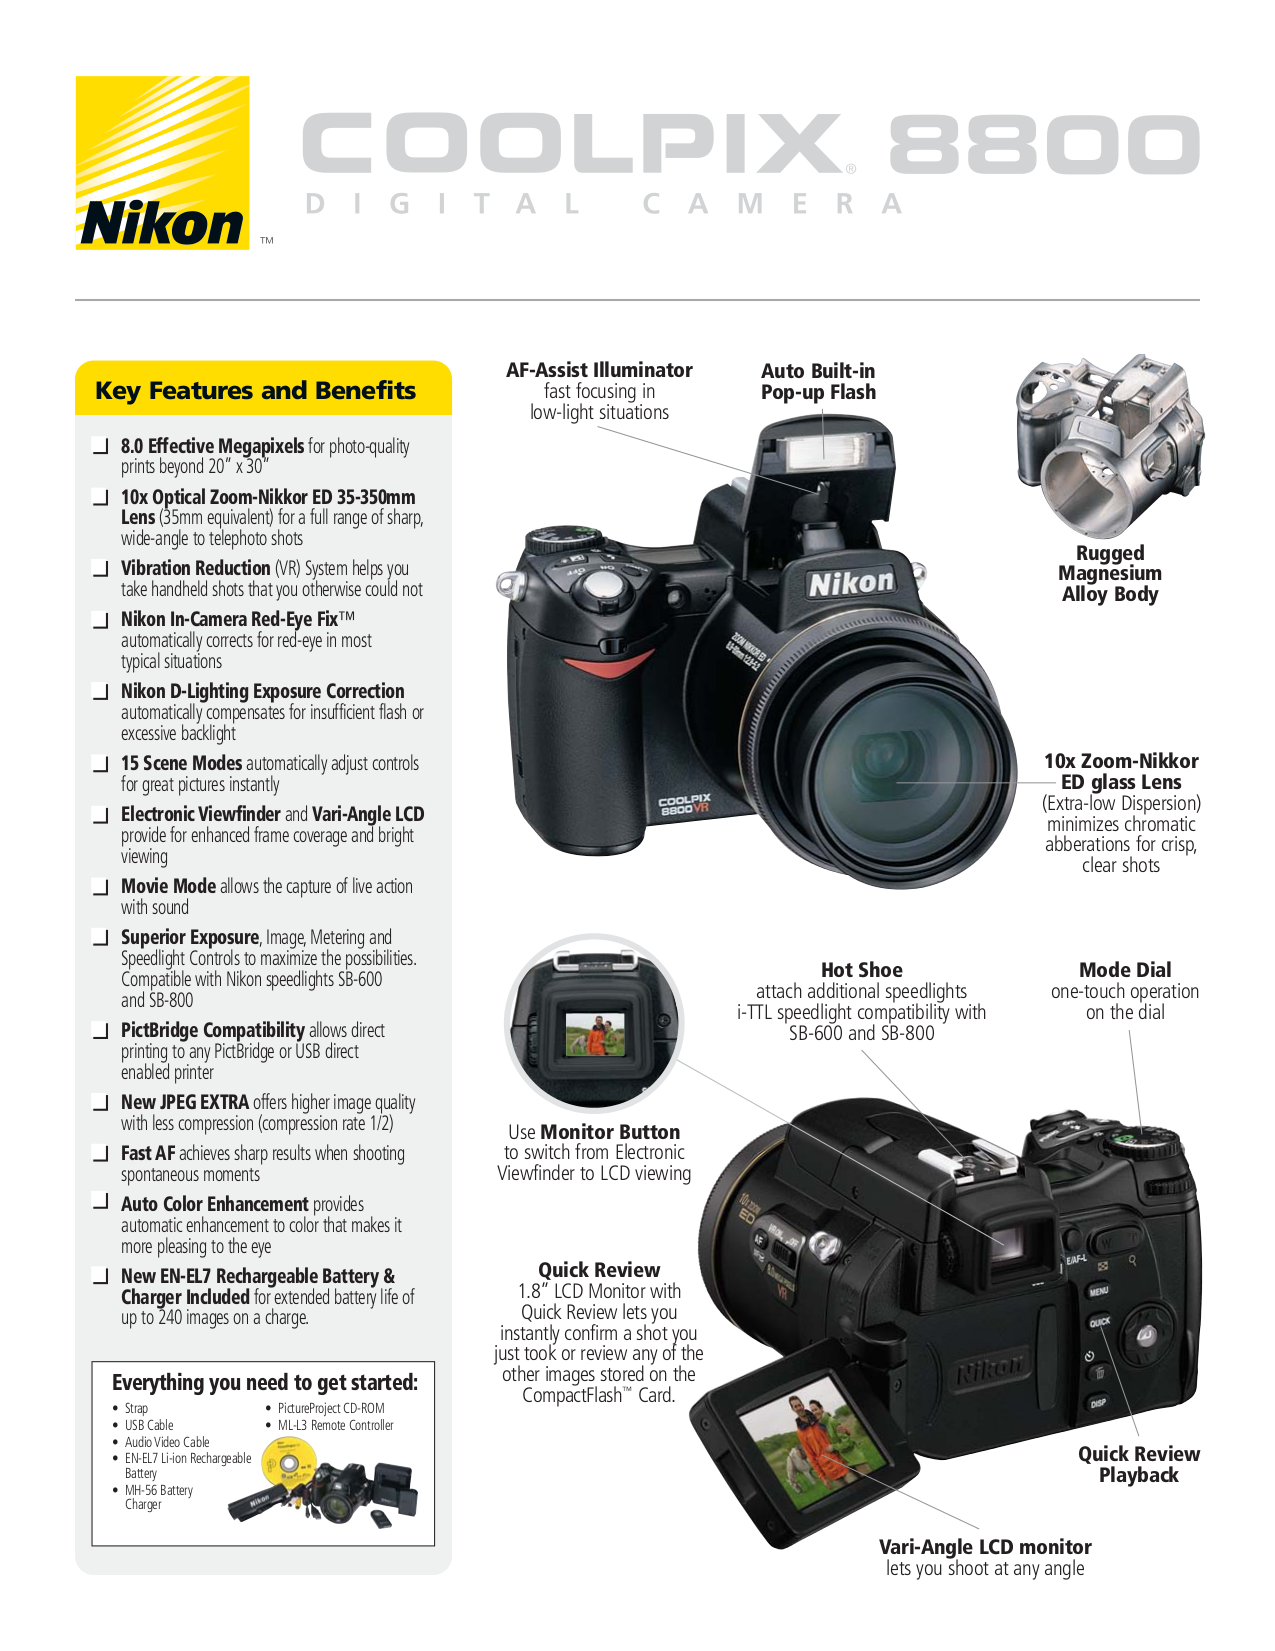 Nikon coolpix 8800 инструкция